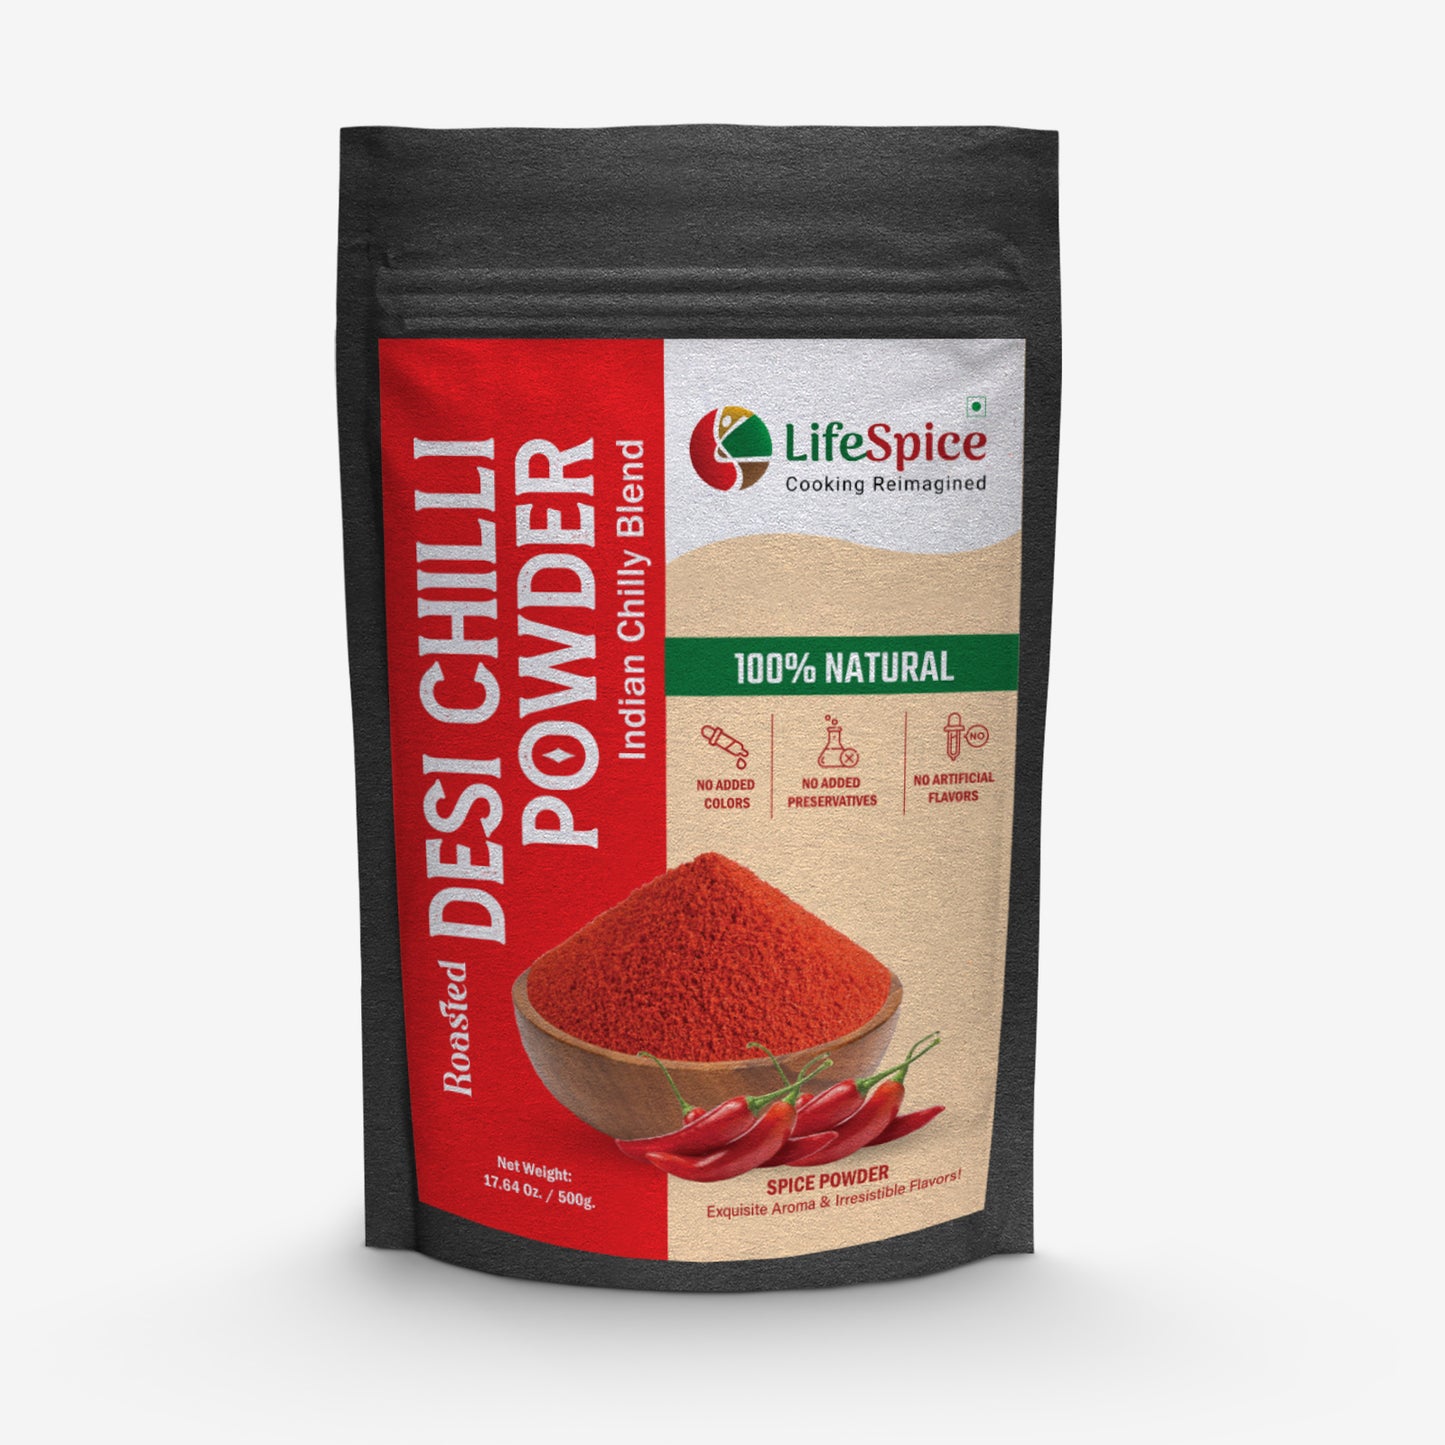 Lifespice Roasted Desi Chilli Powder - 500g pouch